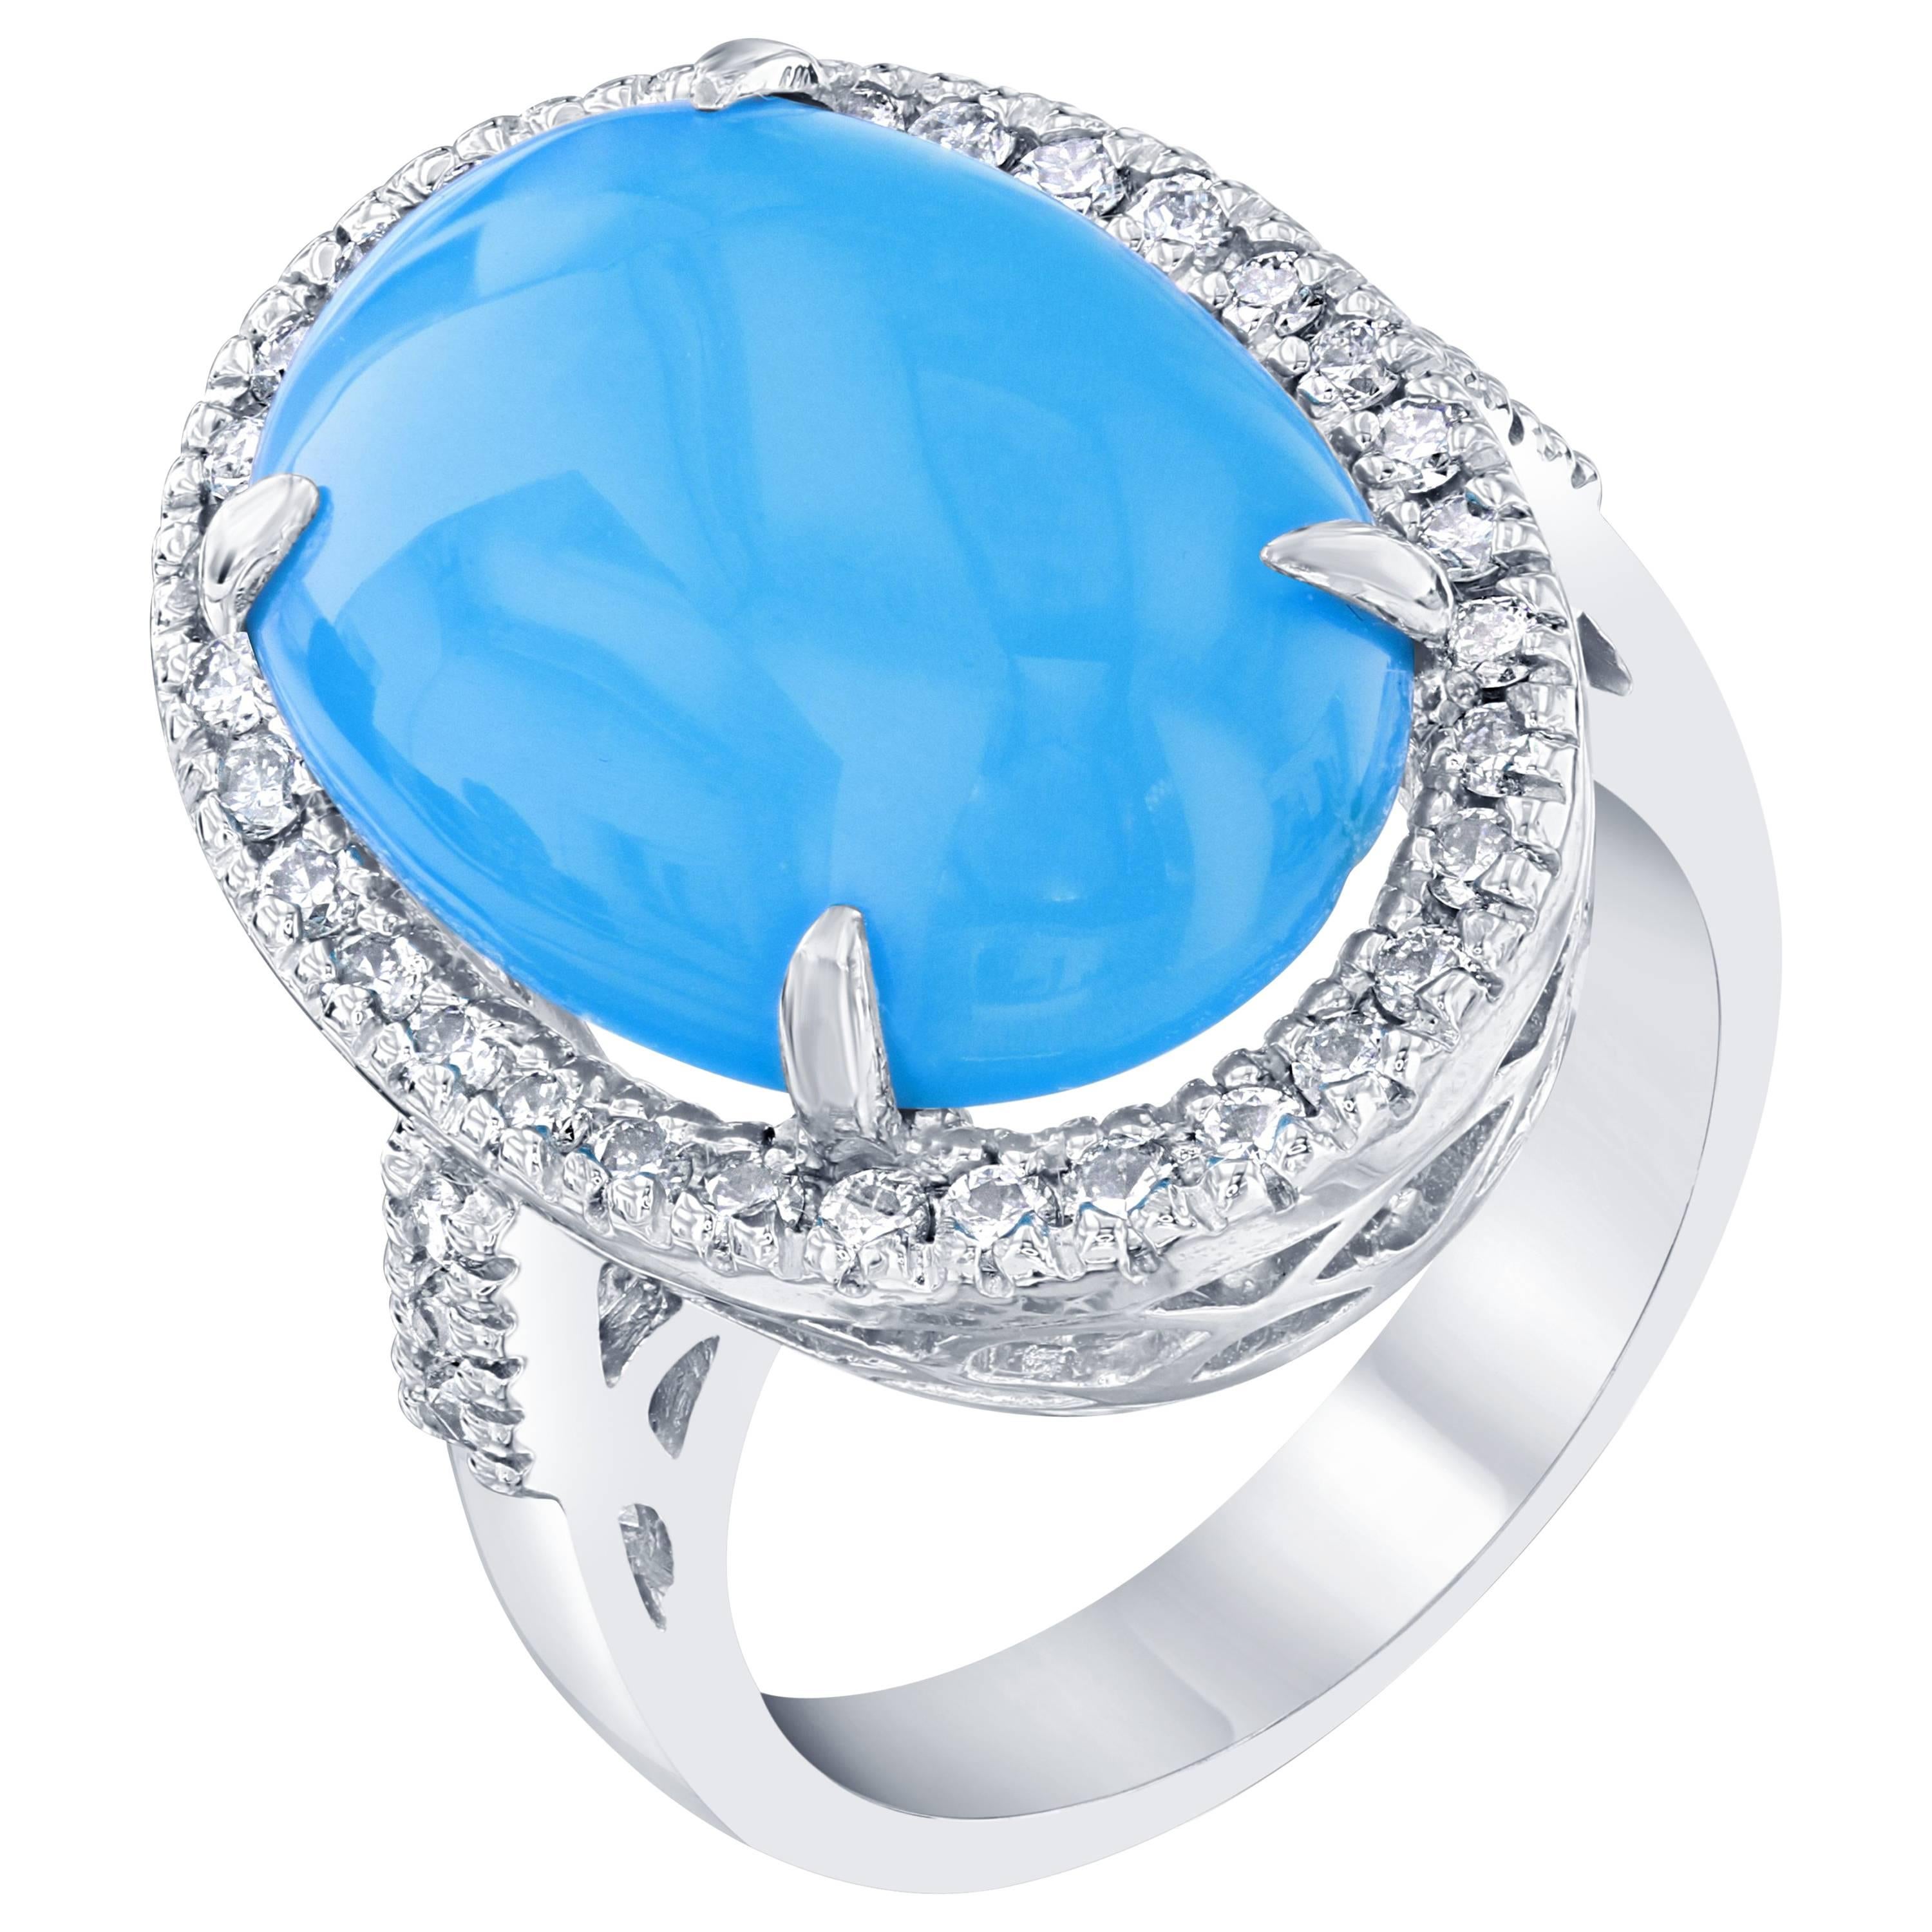 9.35 Carat Turquoise Diamond Cocktail Ring